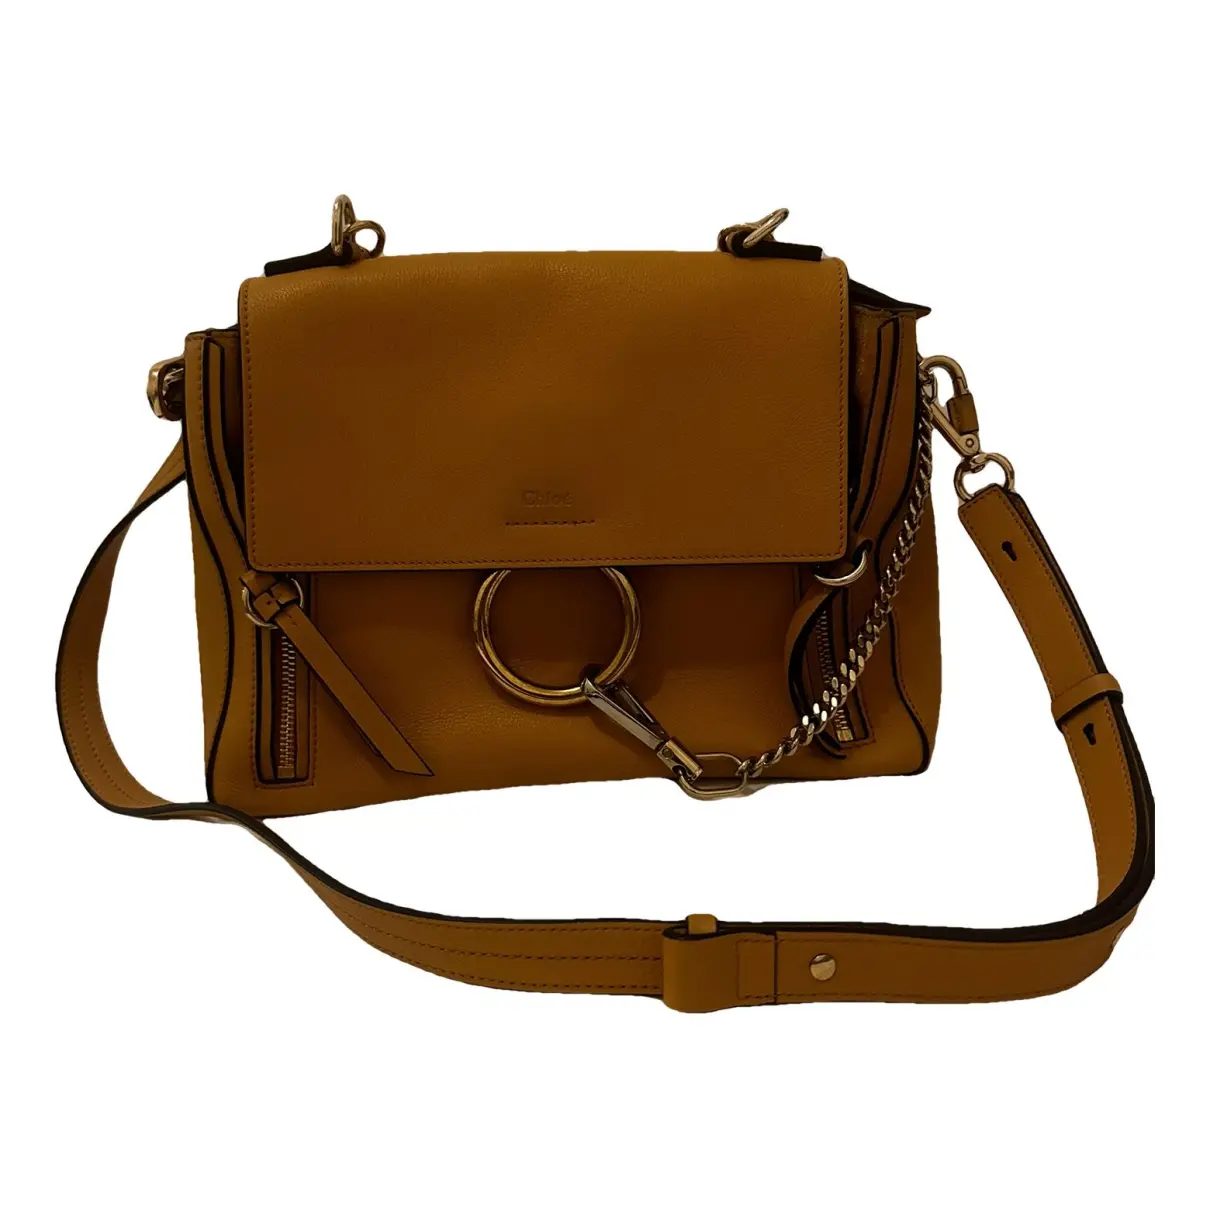 Faye day leather handbag